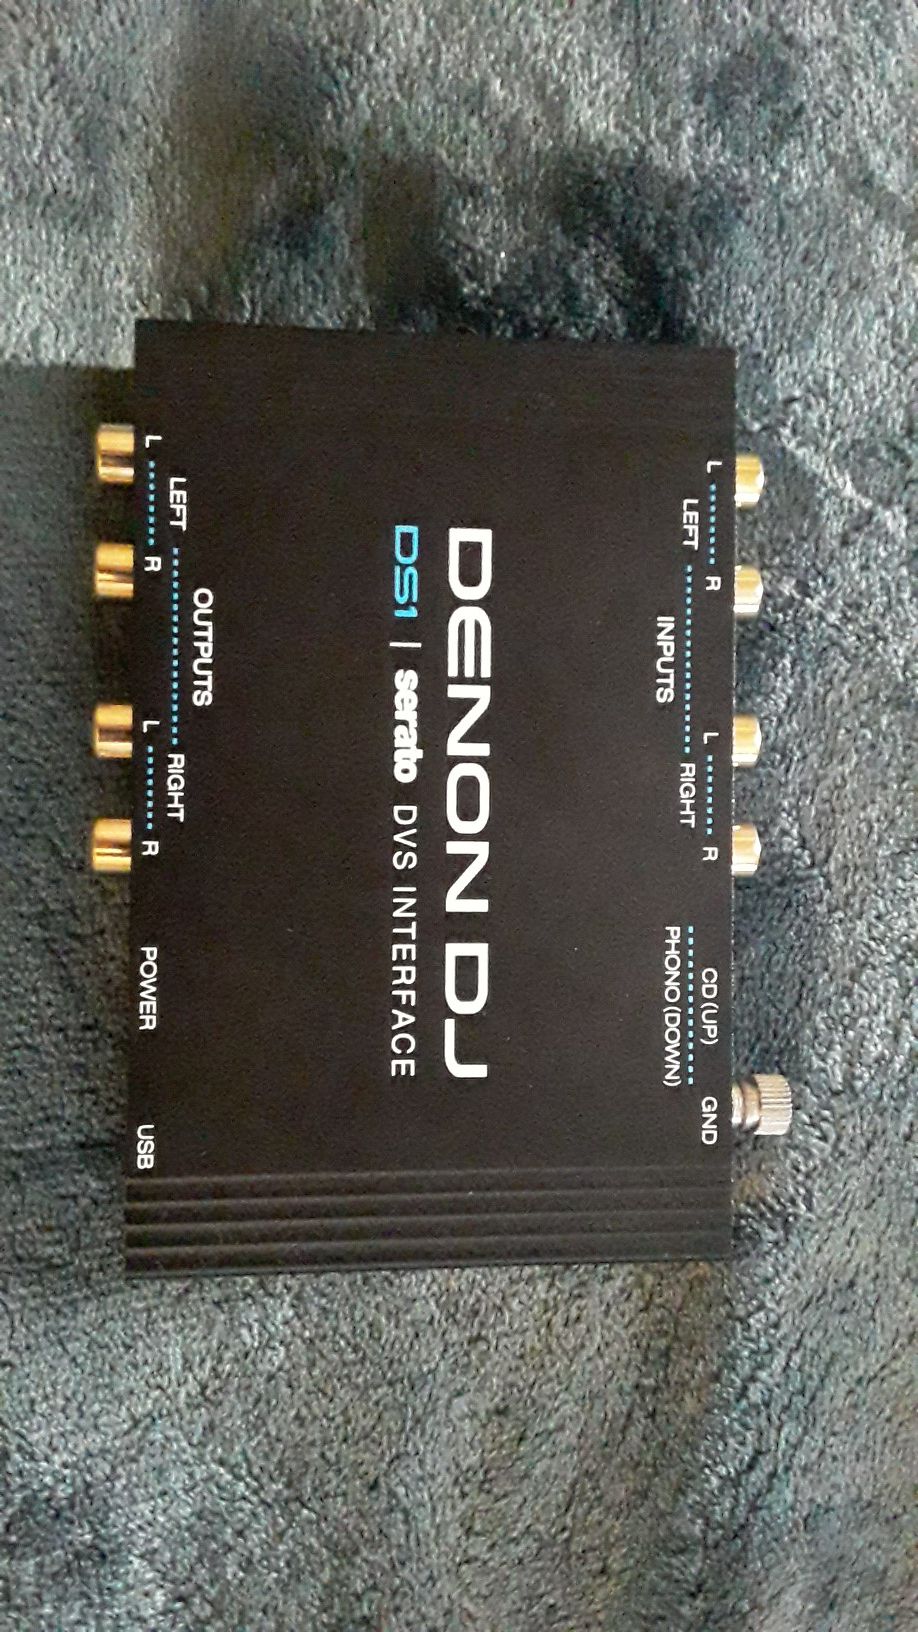 Denon DS1 (Dvs Interface for Serato)